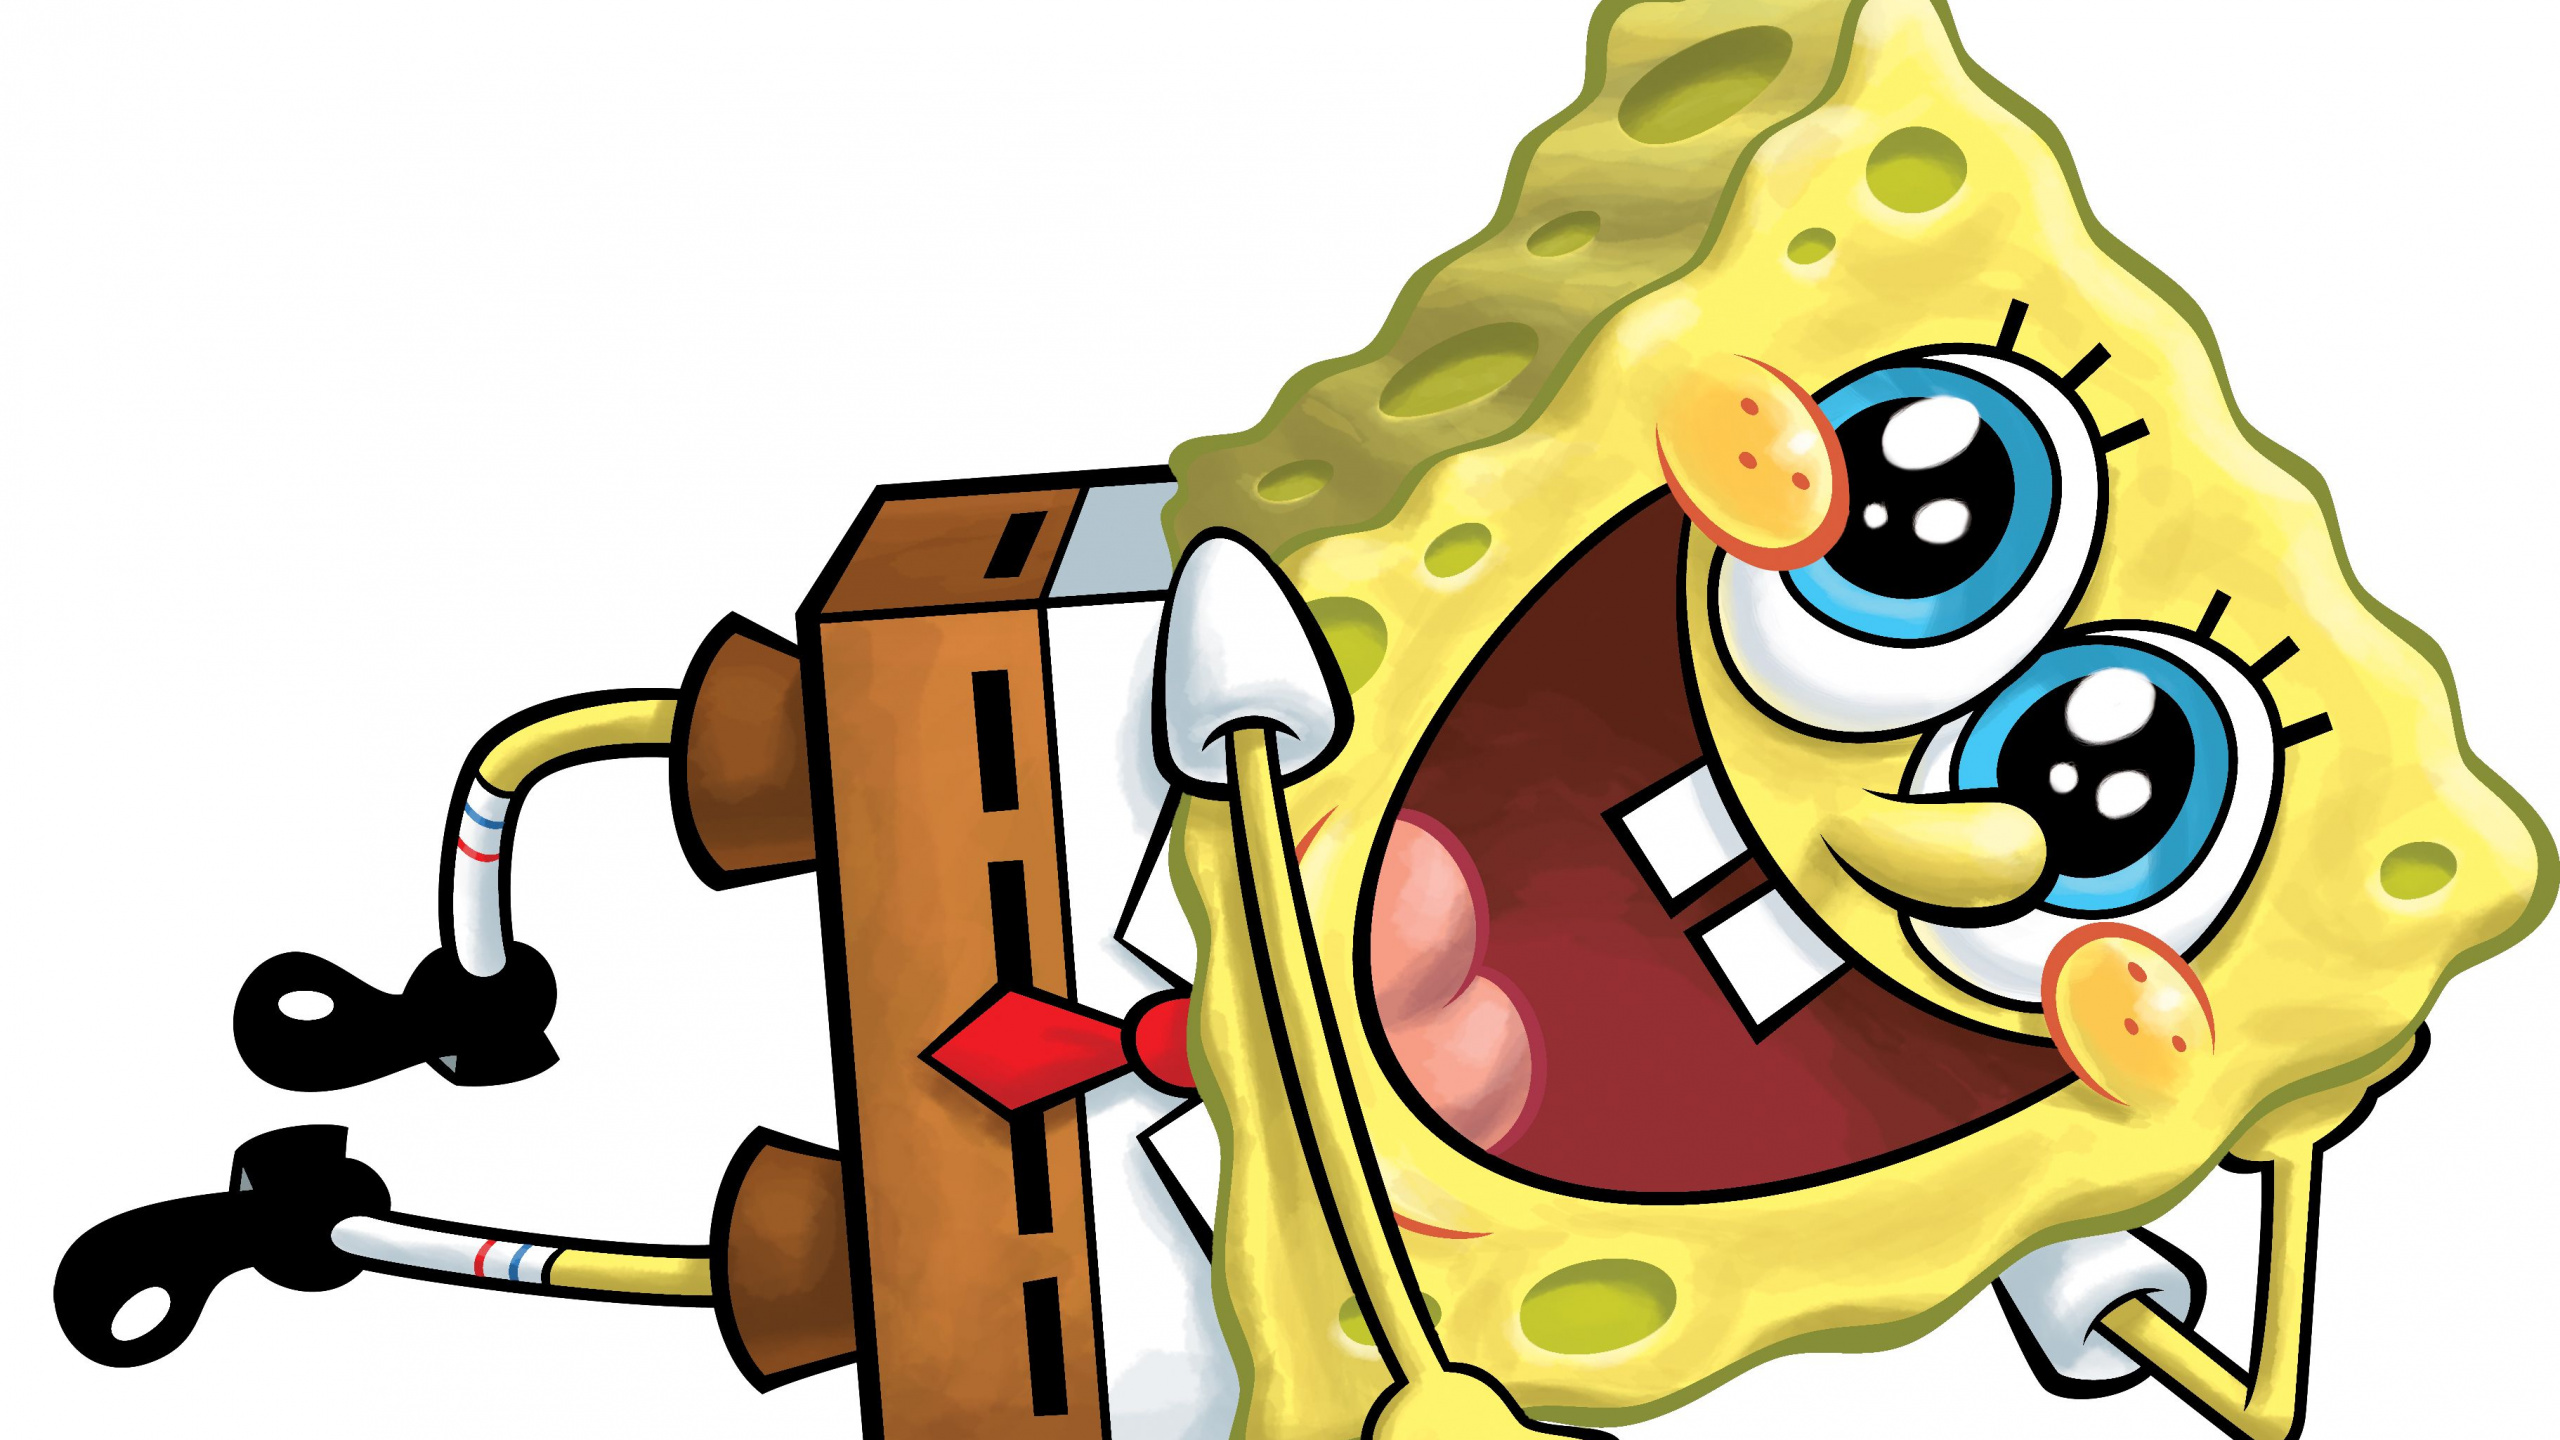 Spongebob Squarepants Holding a Key. Wallpaper in 2560x1440 Resolution